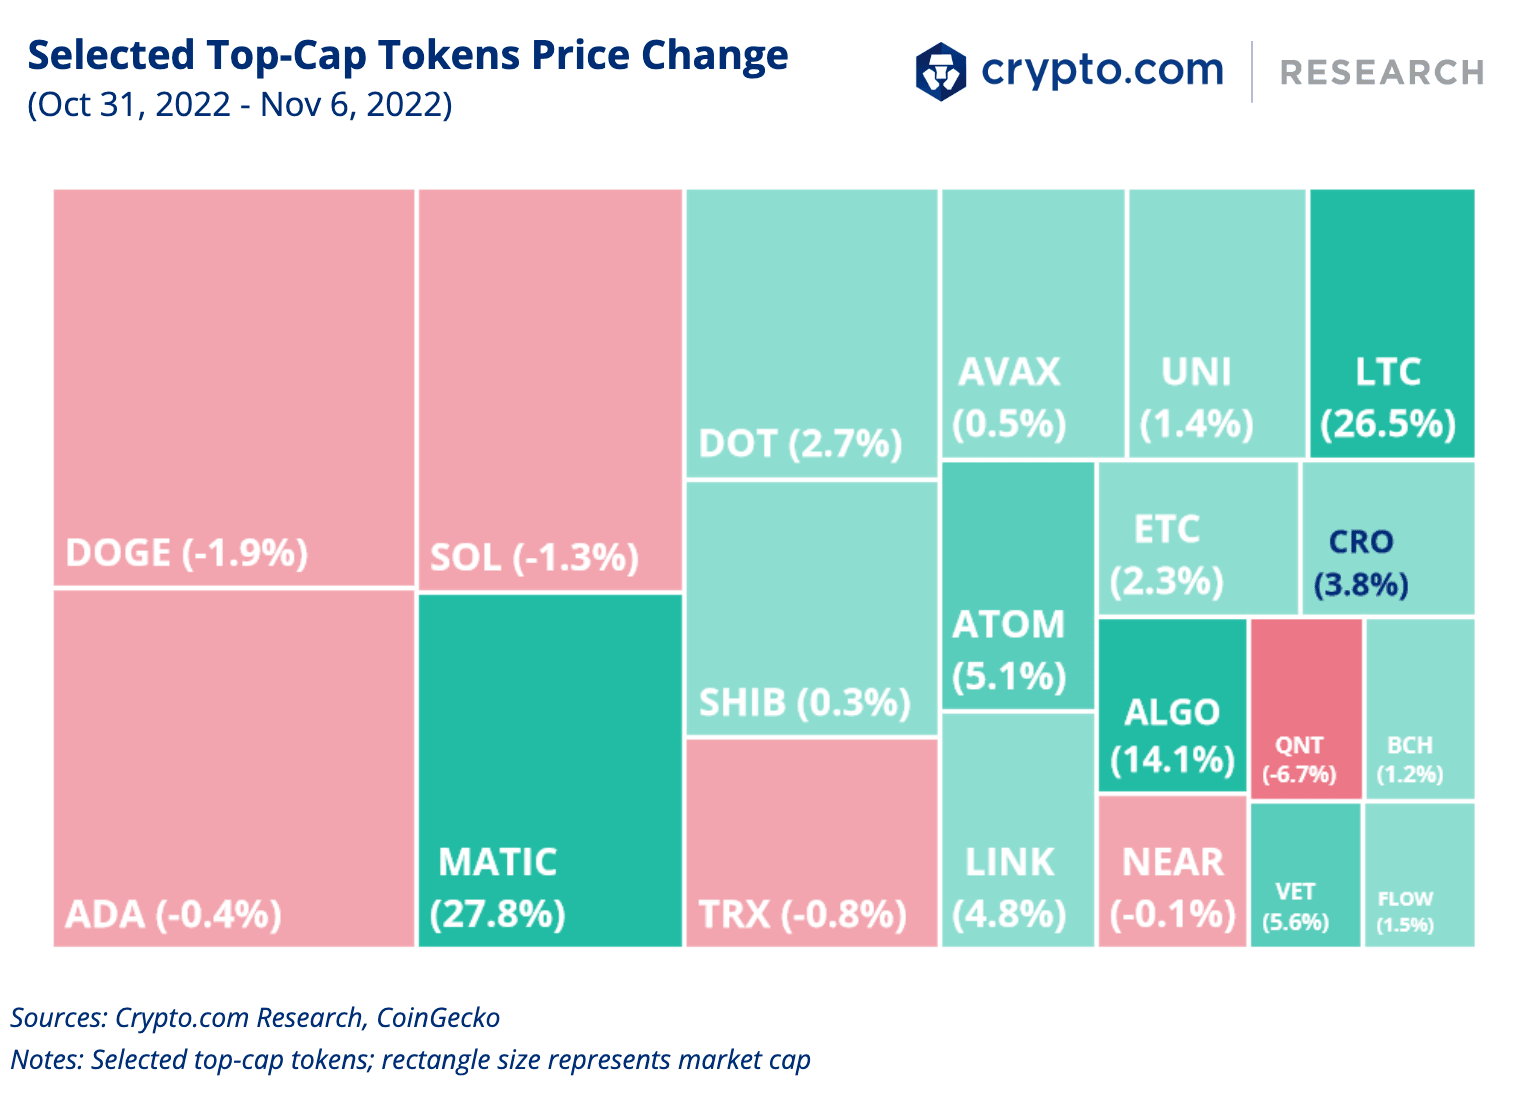 Selected Top Cap Tokens Price Change